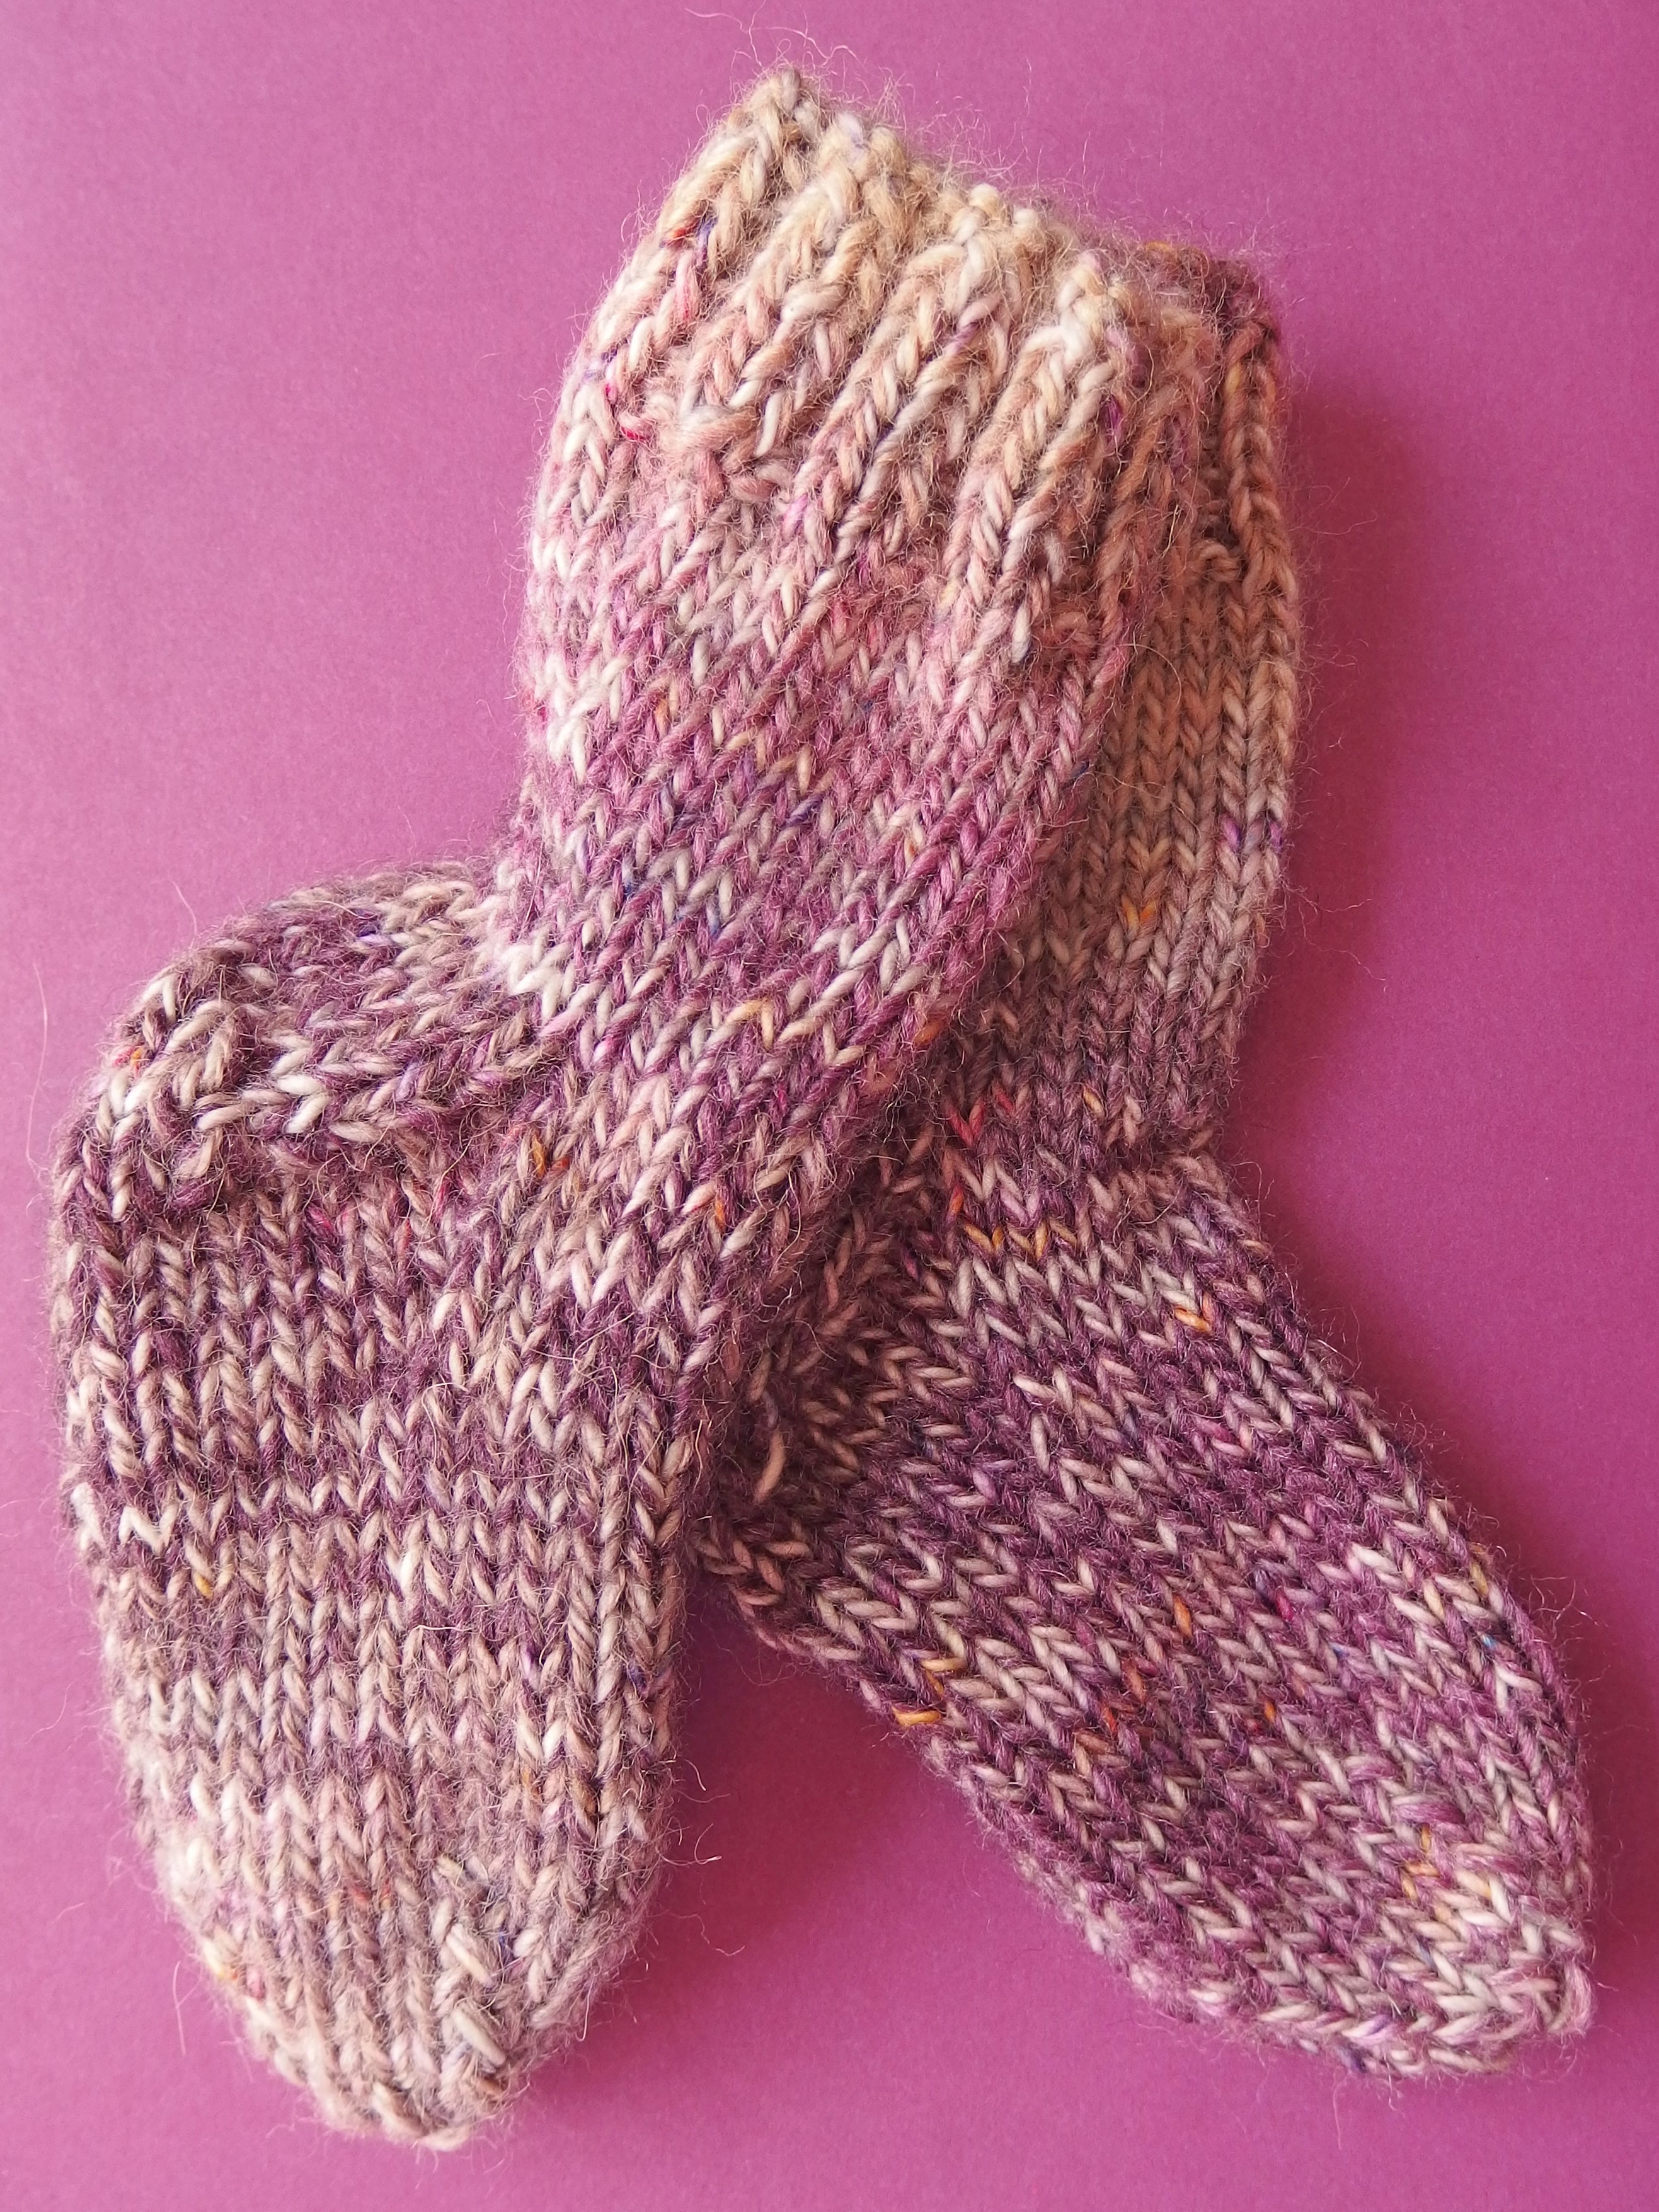 Baby Socks - 80% Wool 20% Silk: Autumn Shades of red